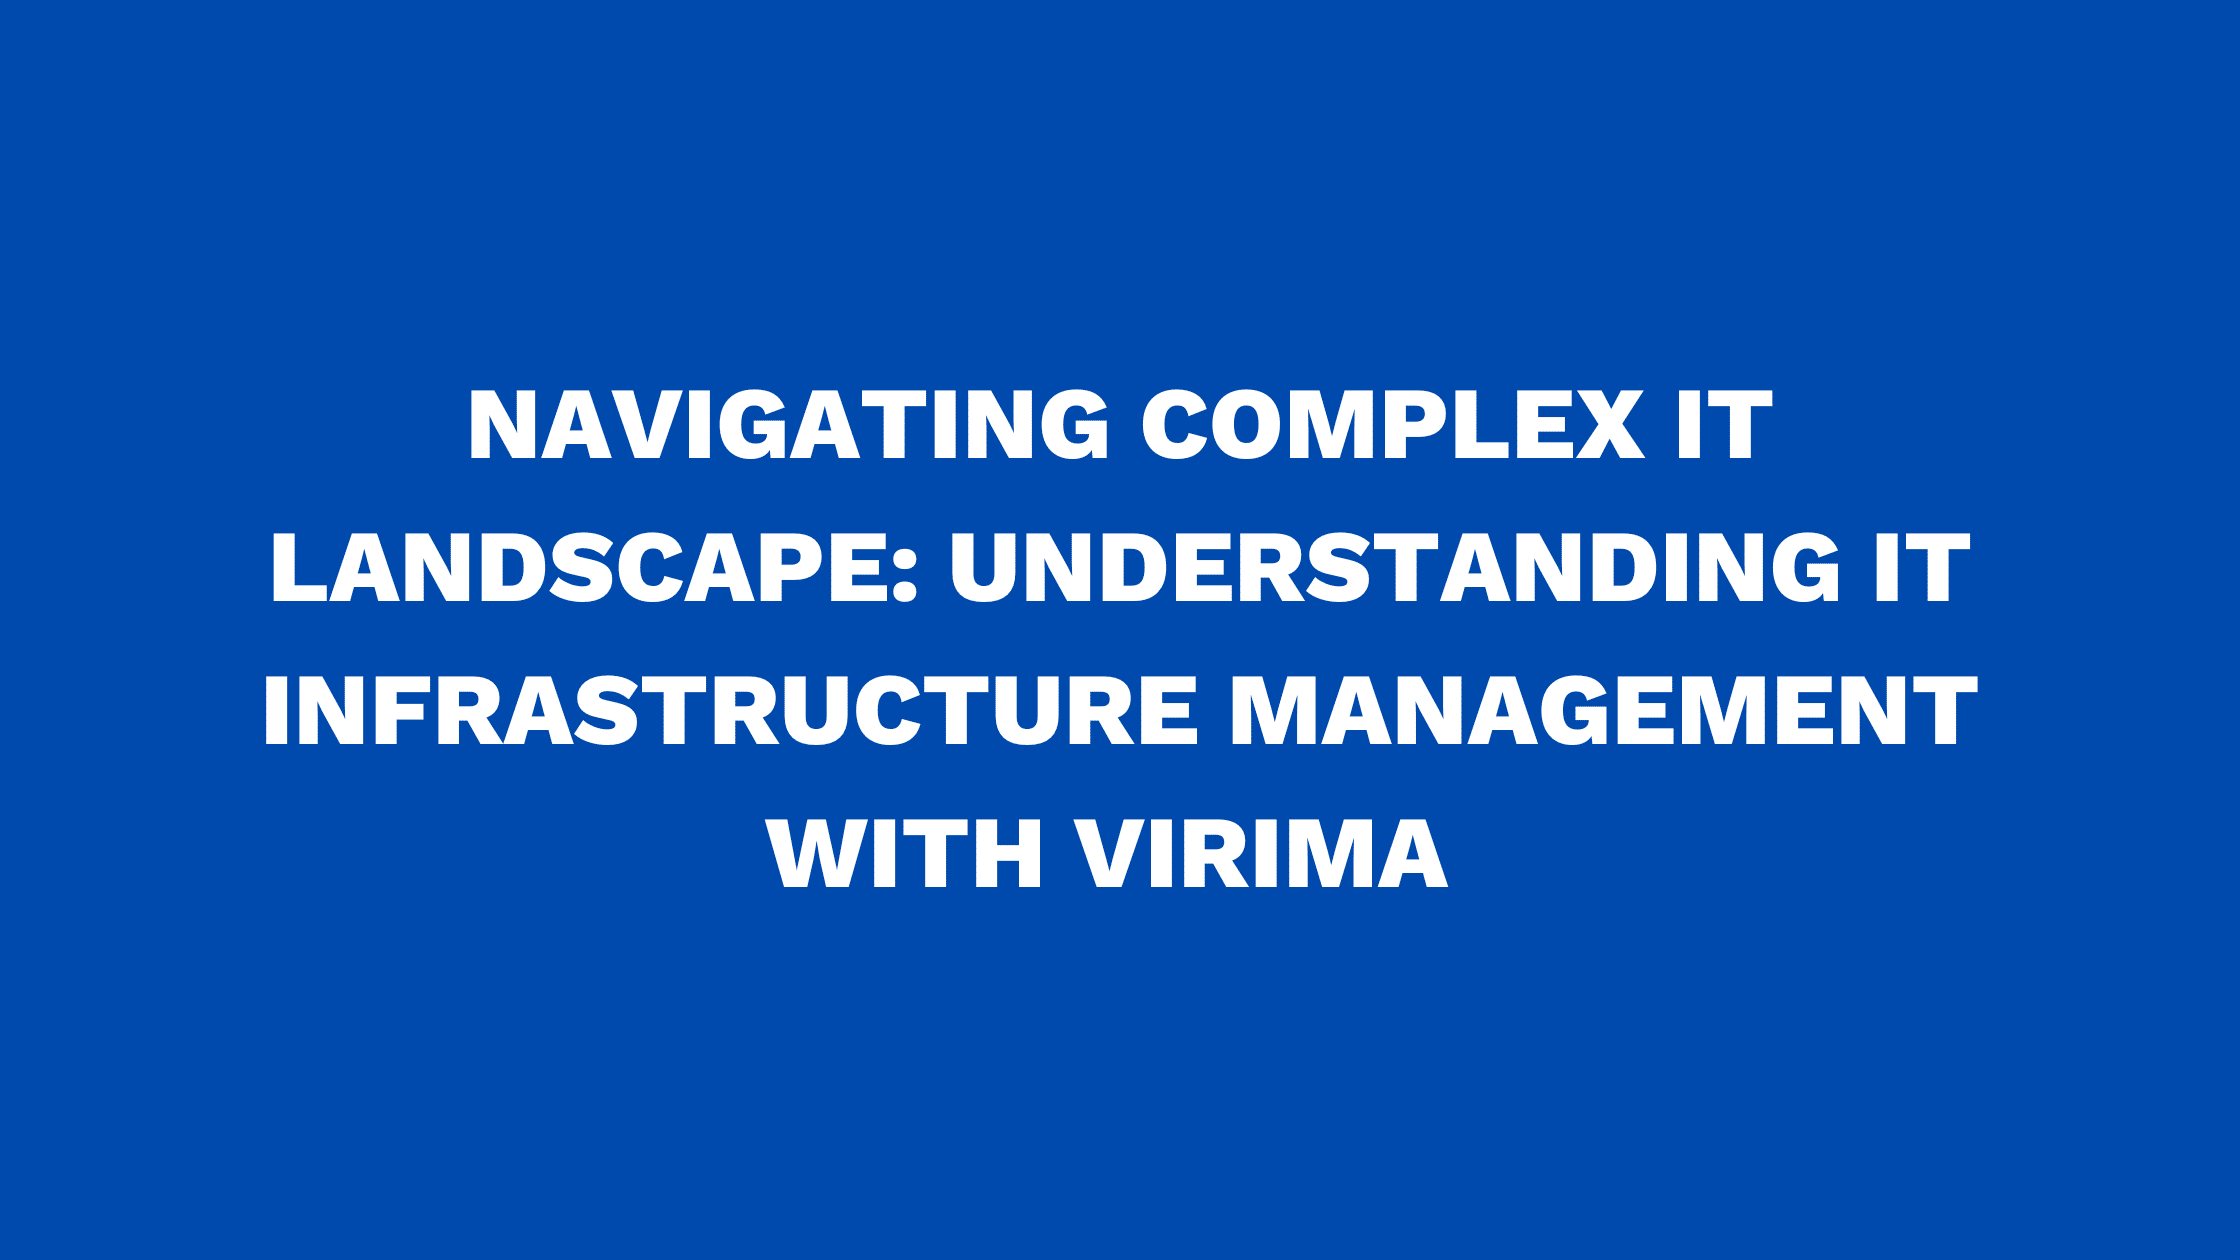 Navigating complex IT landscape: Understanding IT Infrastructure Management with Virima